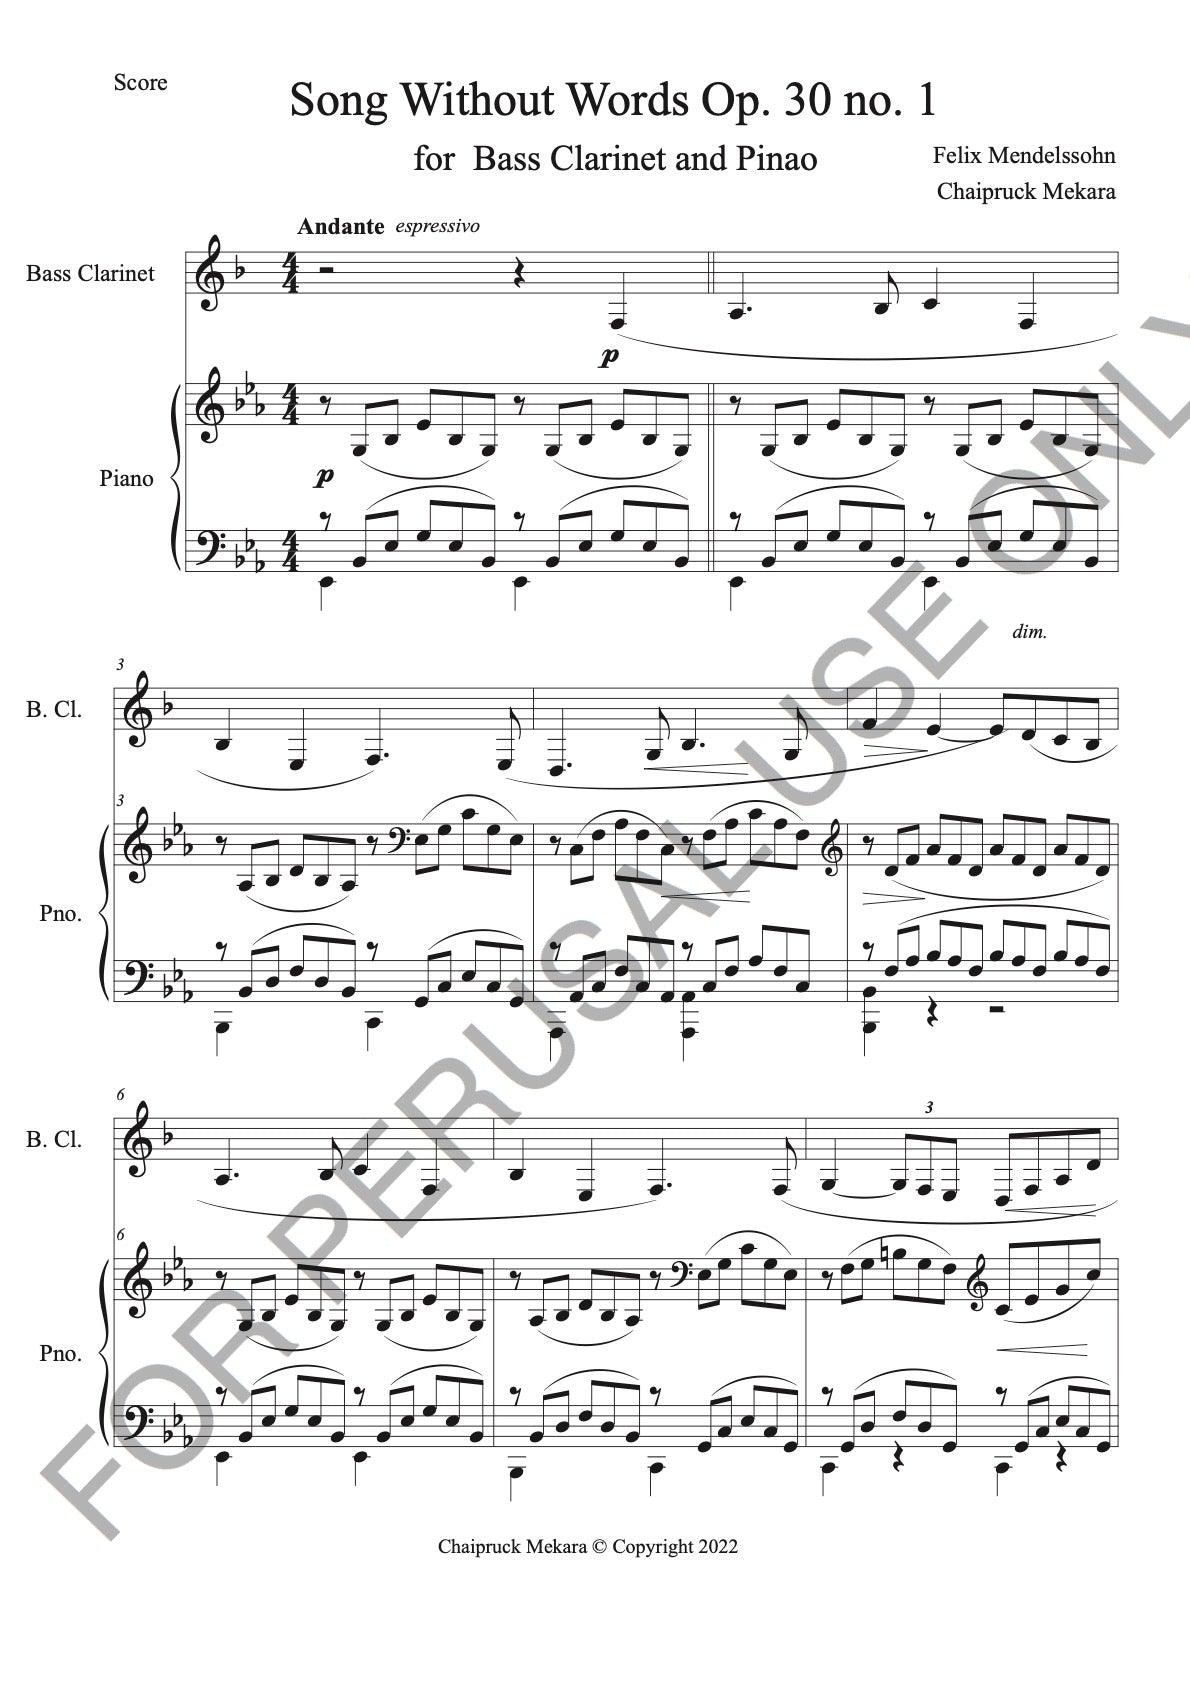 Bass Clarinet & Piano sheet music - Songs Without Words Op. 30, no. 1 - ChaipruckMekara